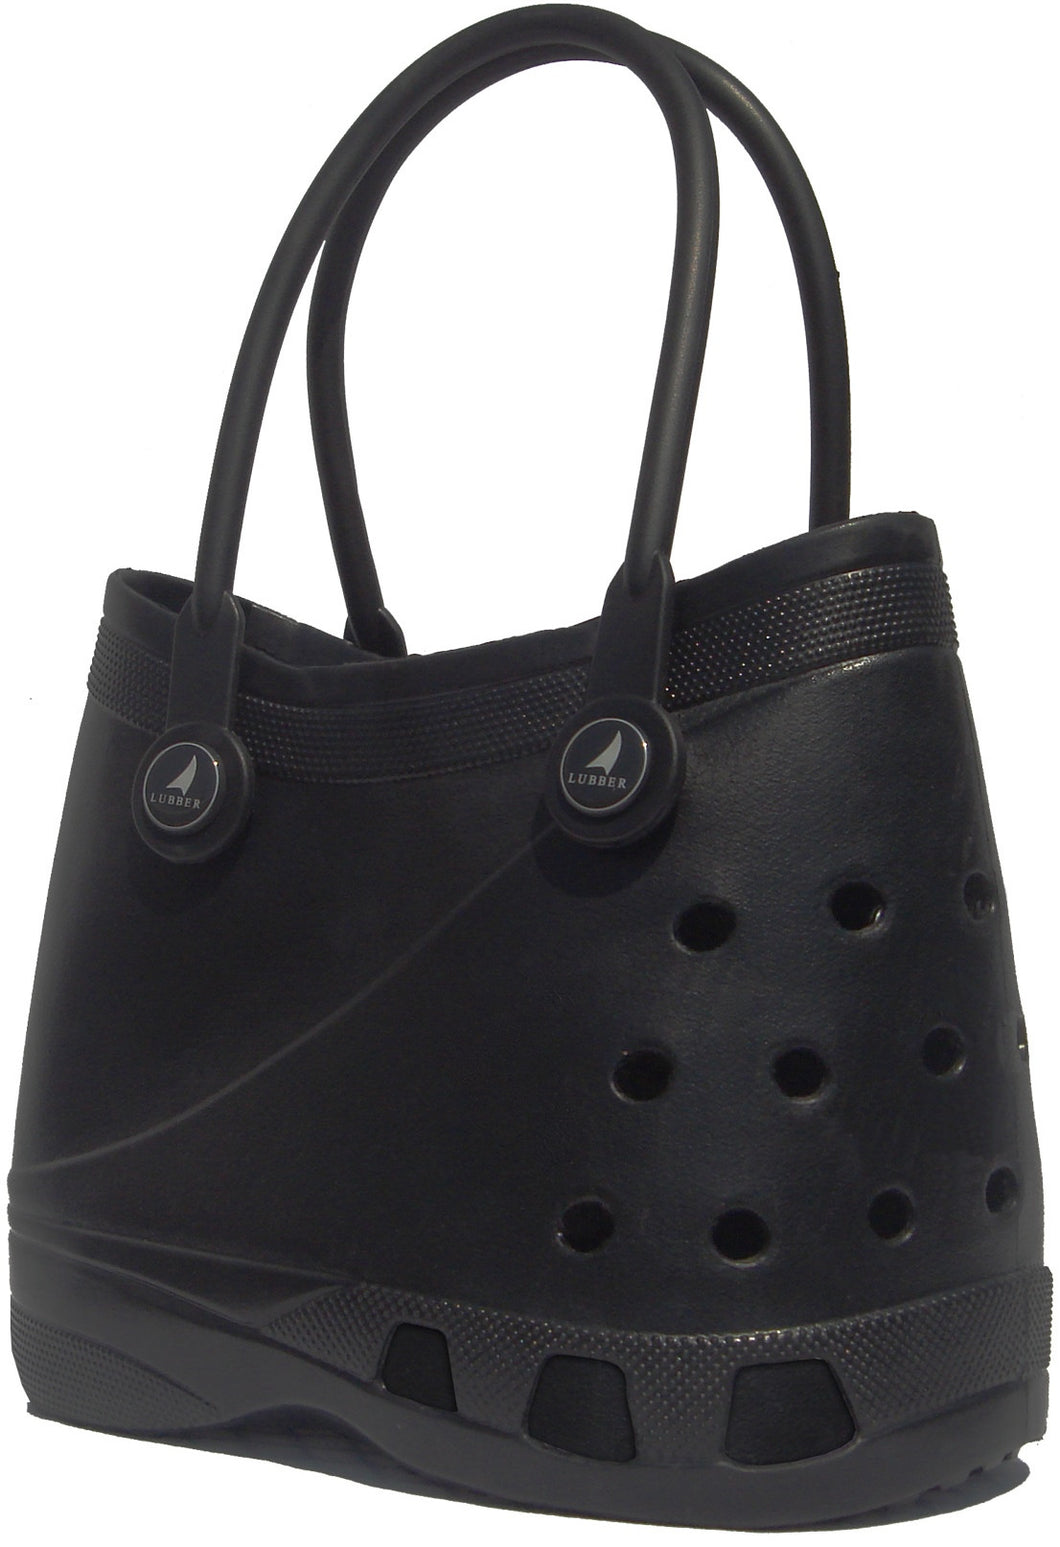 LUBBER Tote Rubber Croc Waterproof Beach Bag (Black)